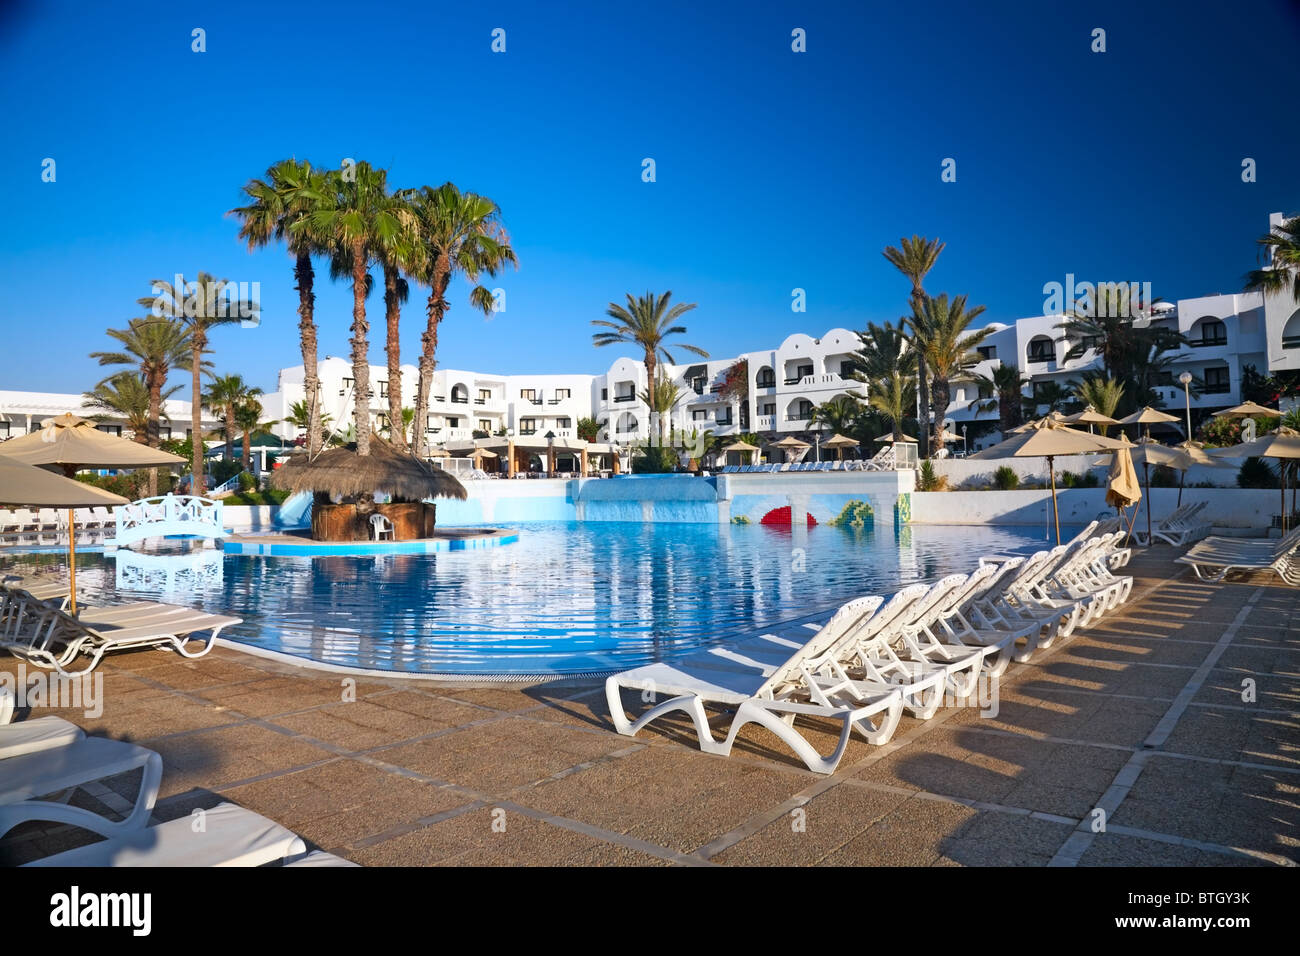 swimming pool with palm trees, Djerba, Tunisia Stock Photo